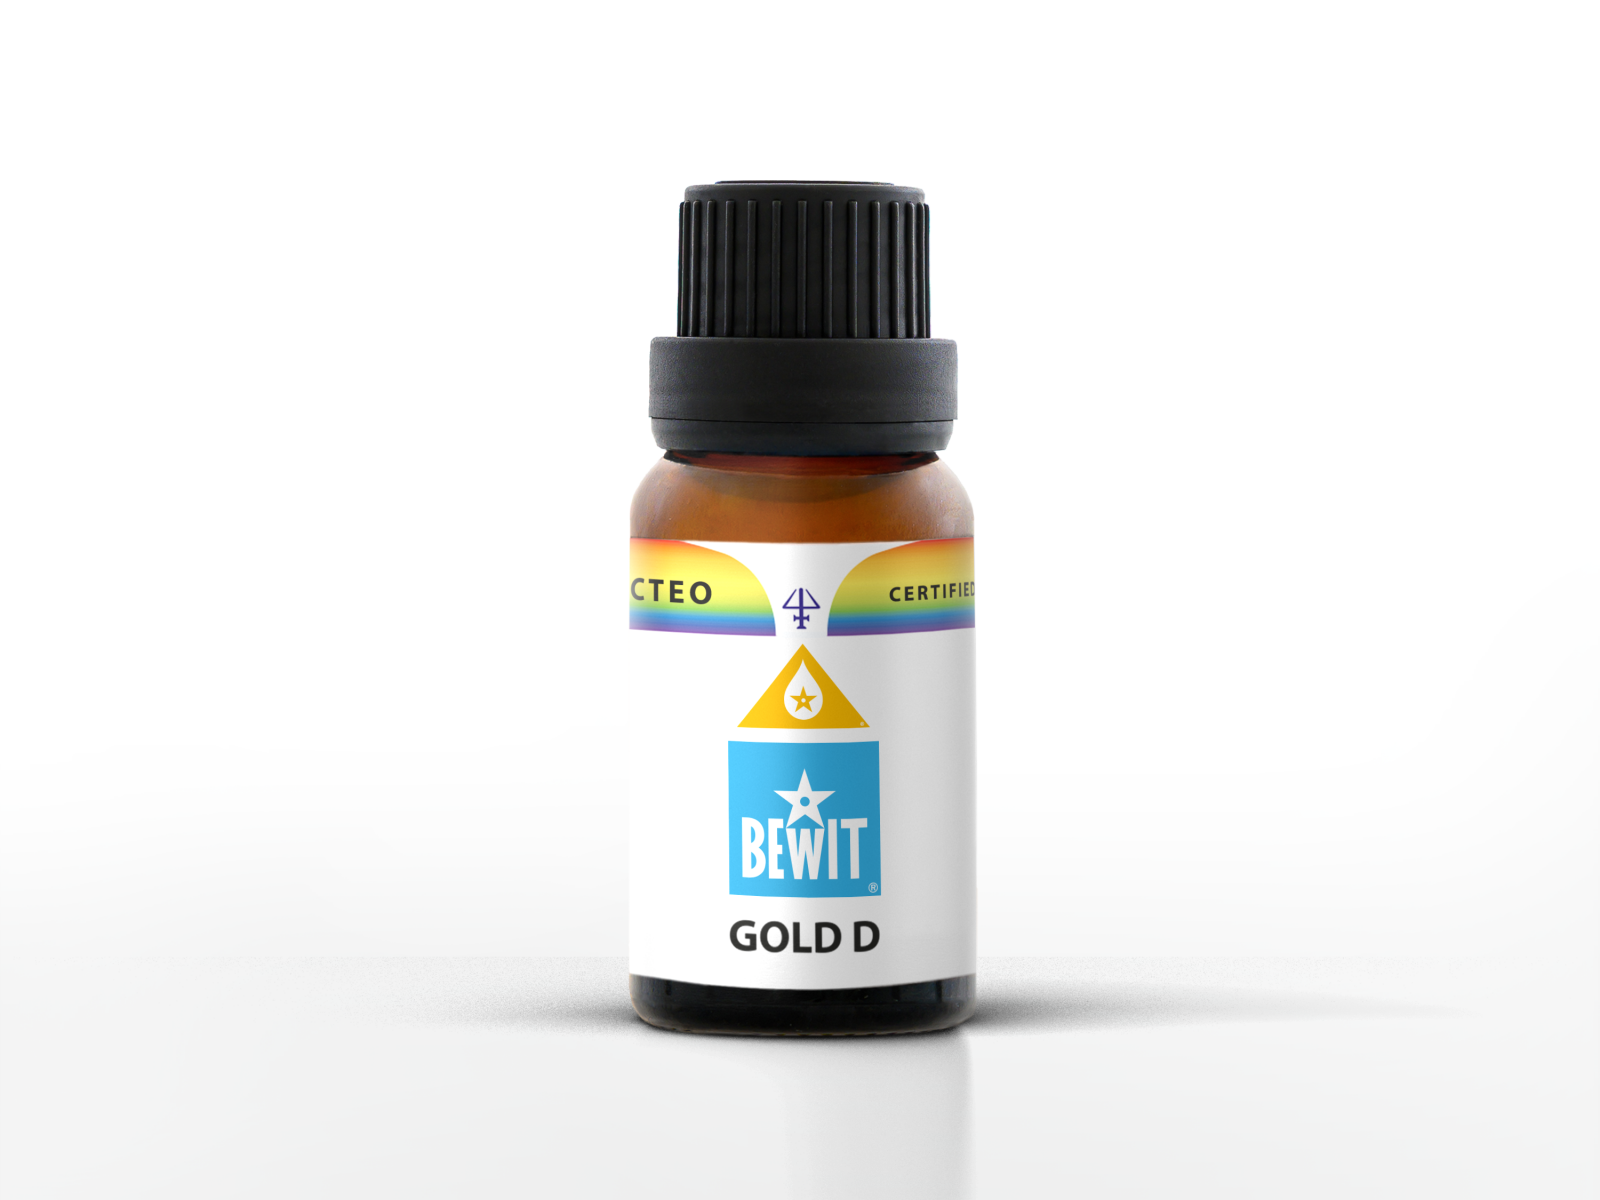 BEWIT GOLD D - Blend of essential oils - 1